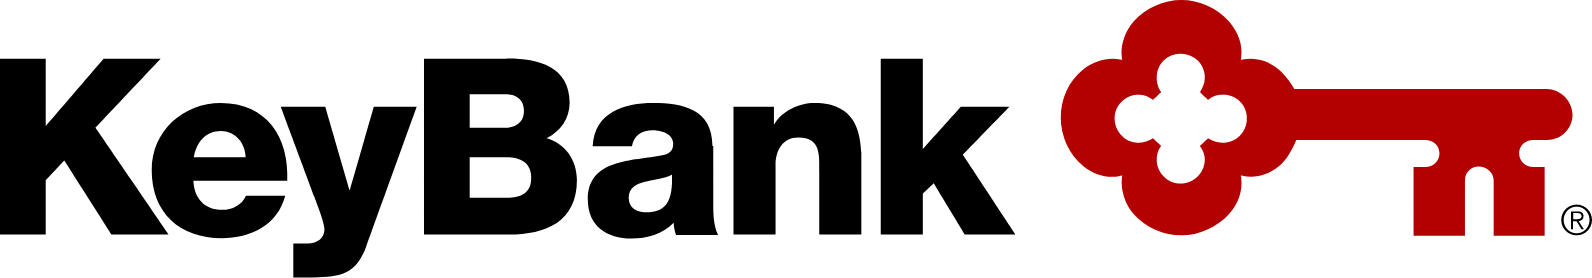 KeyCorp (KeyBank) logo large (transparent PNG)